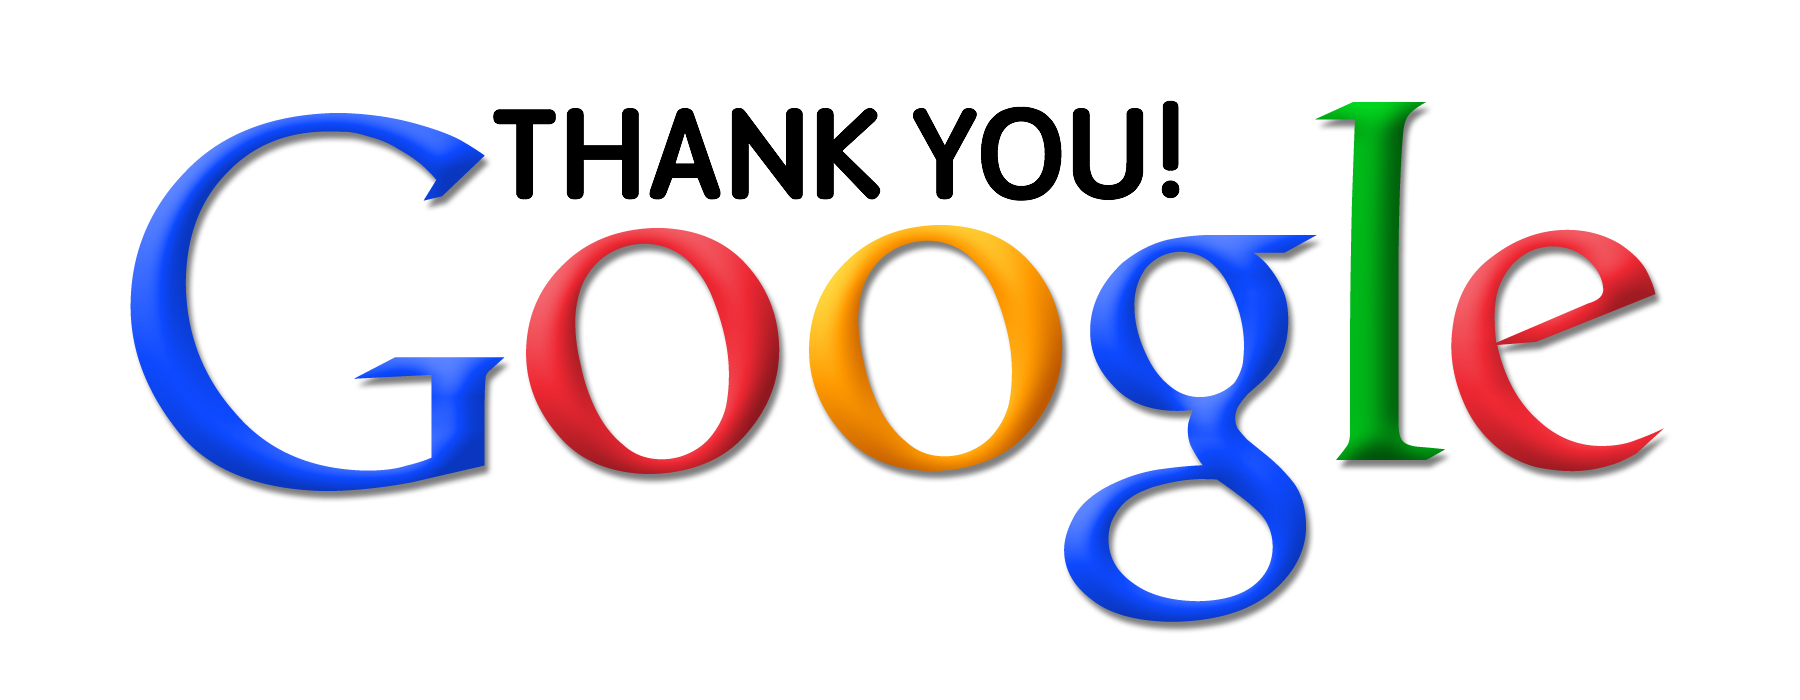 DD_Google-thank-you-google